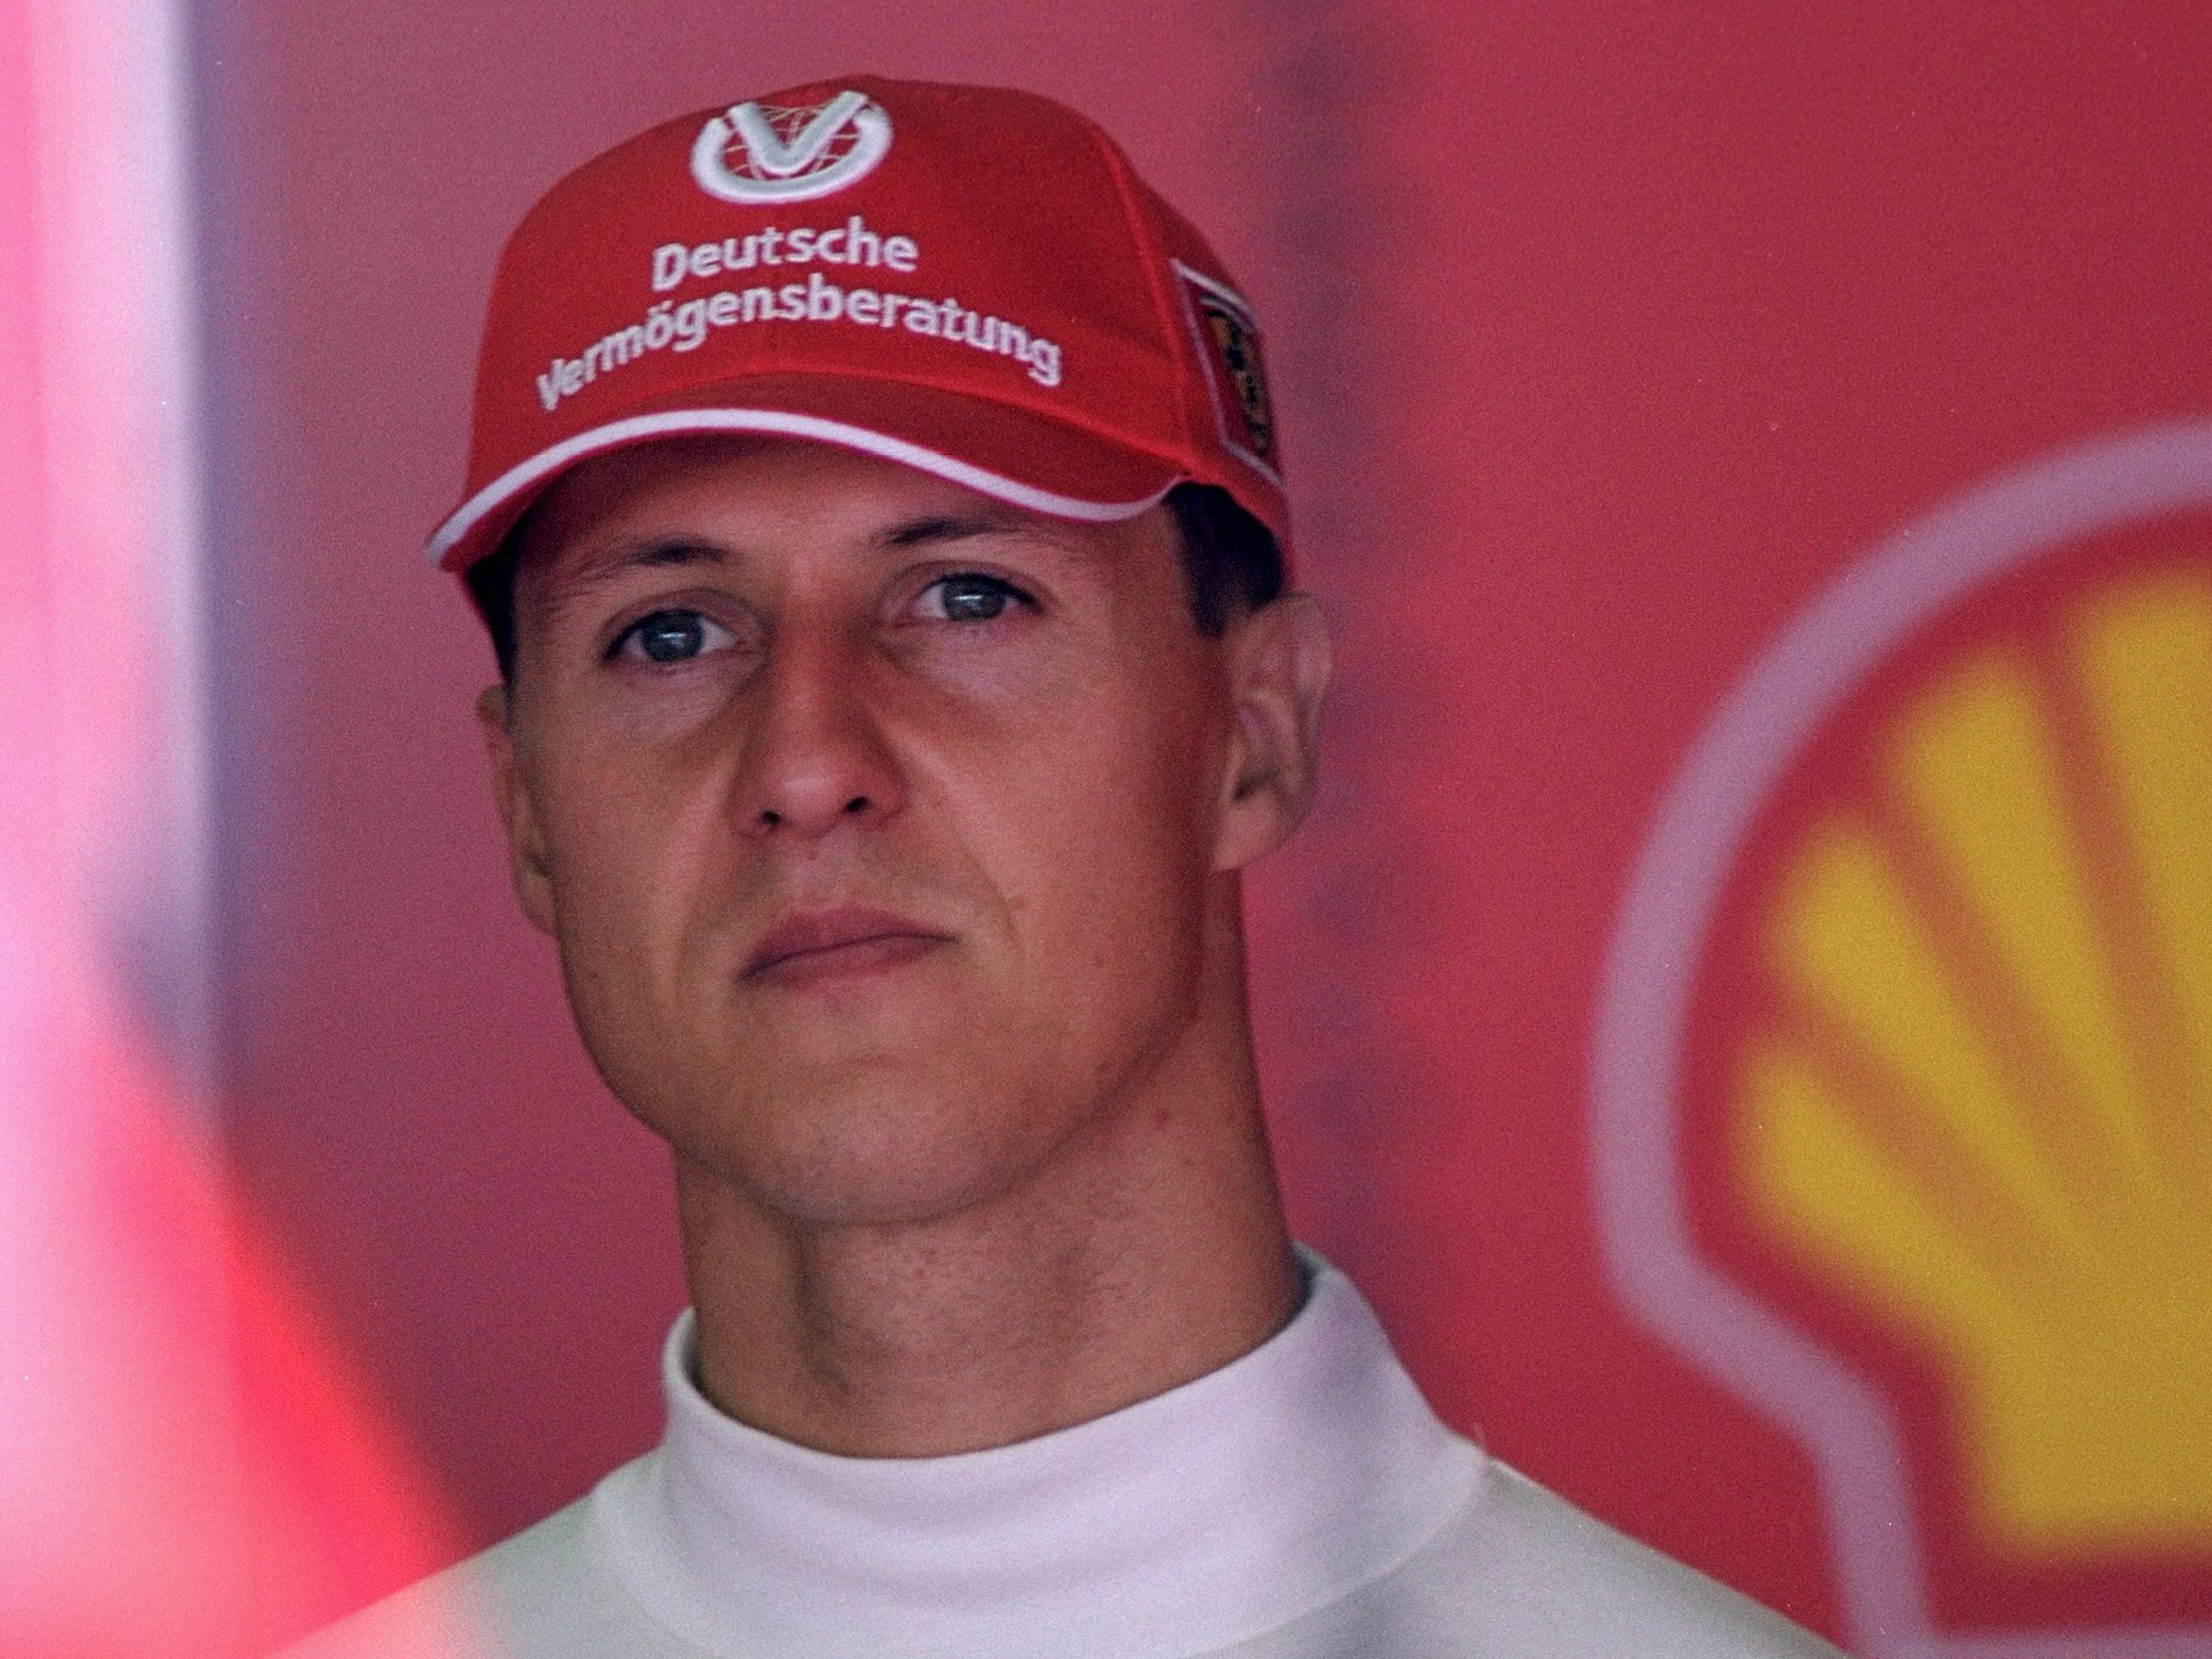 Michael Schumacher during the 2000 F1 Japanese Grand Prix (Image via Clive Mason/Allsport)